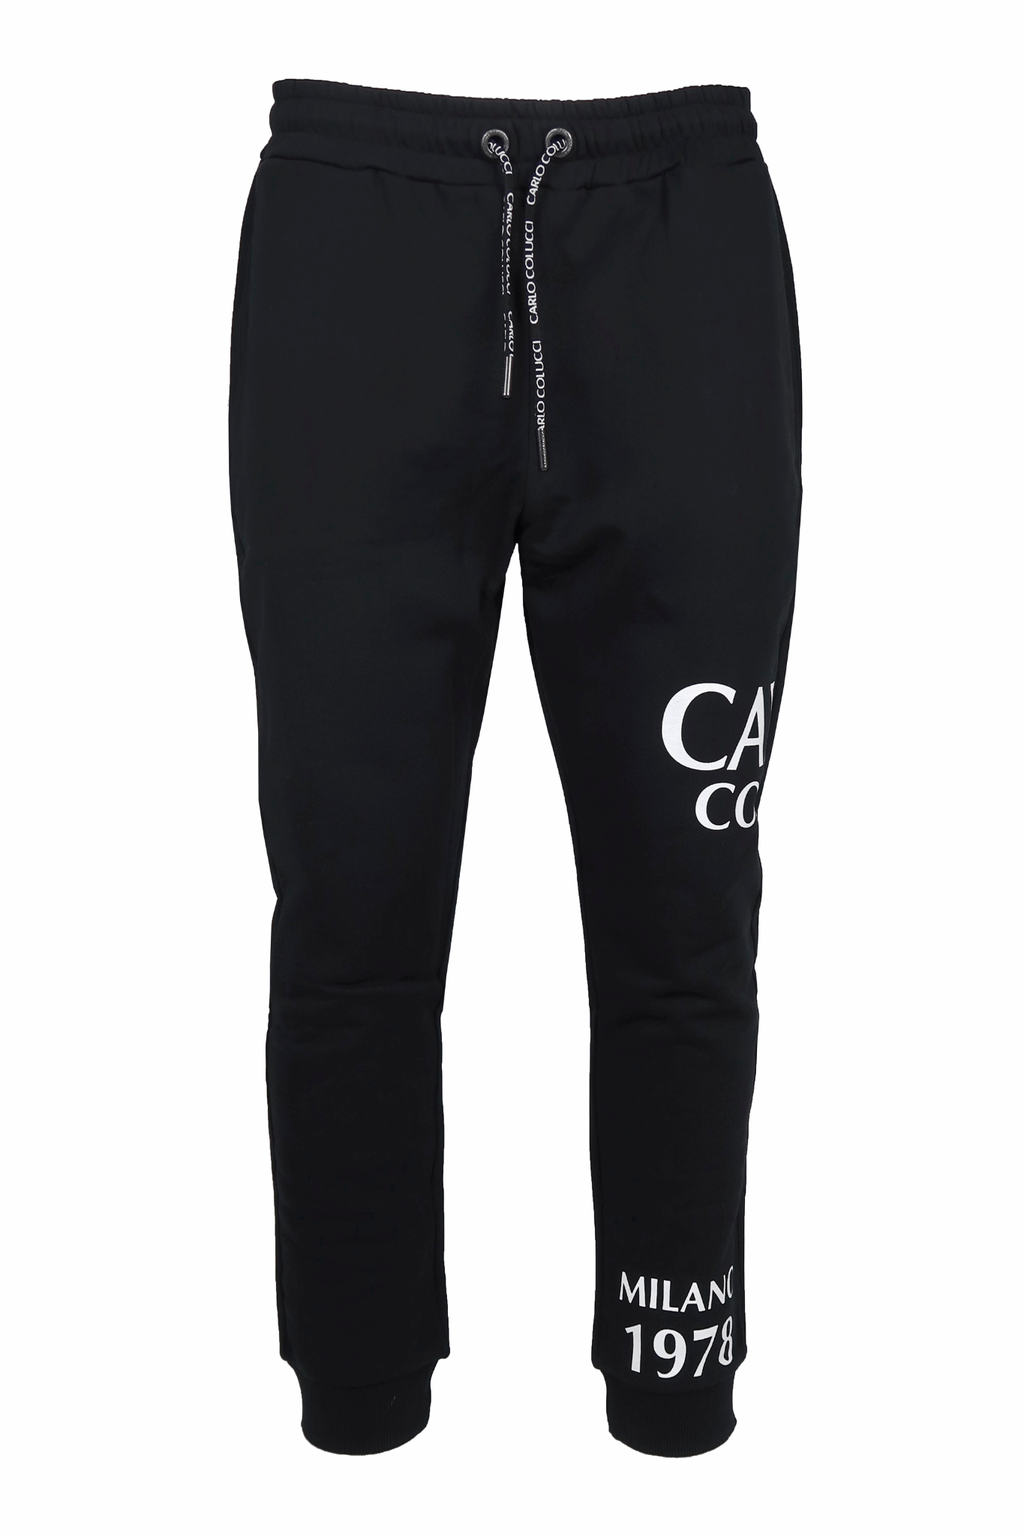 Carlo Colucci Big Logo Sweatpants Black